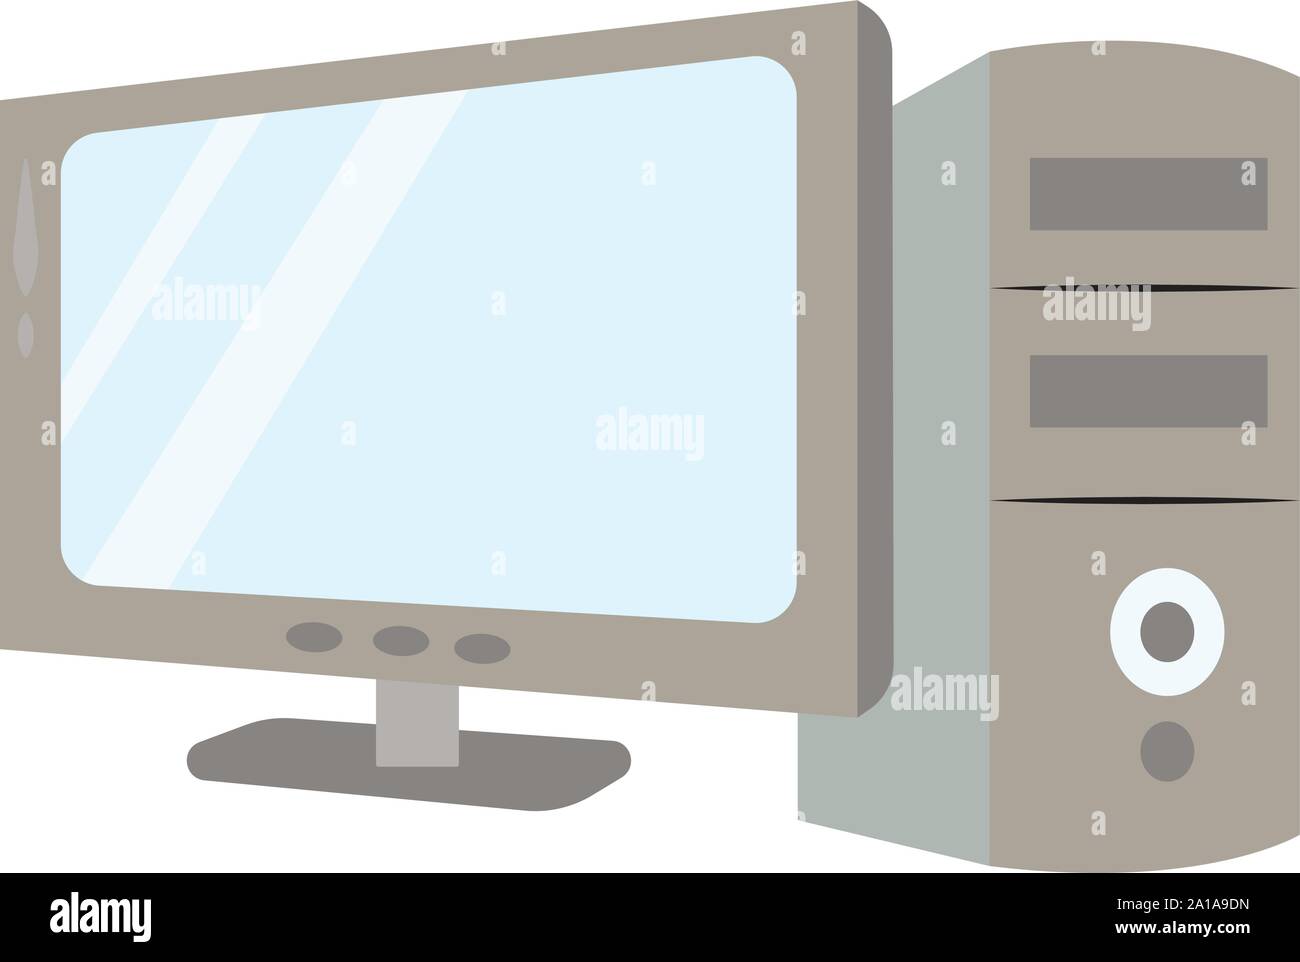 Computer setup, illustration, vector on white background. Stock Vector